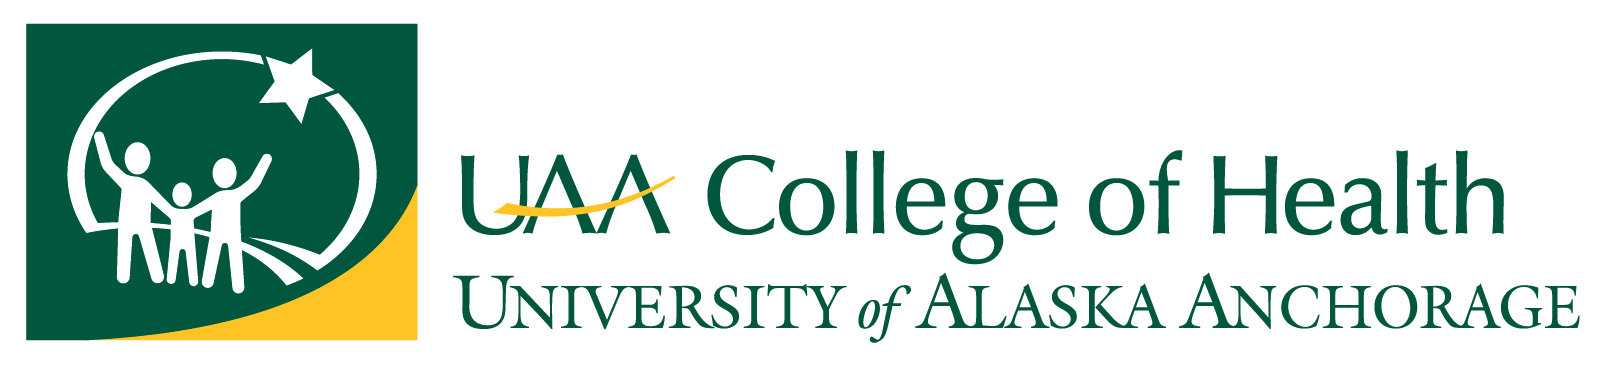 college of health logo